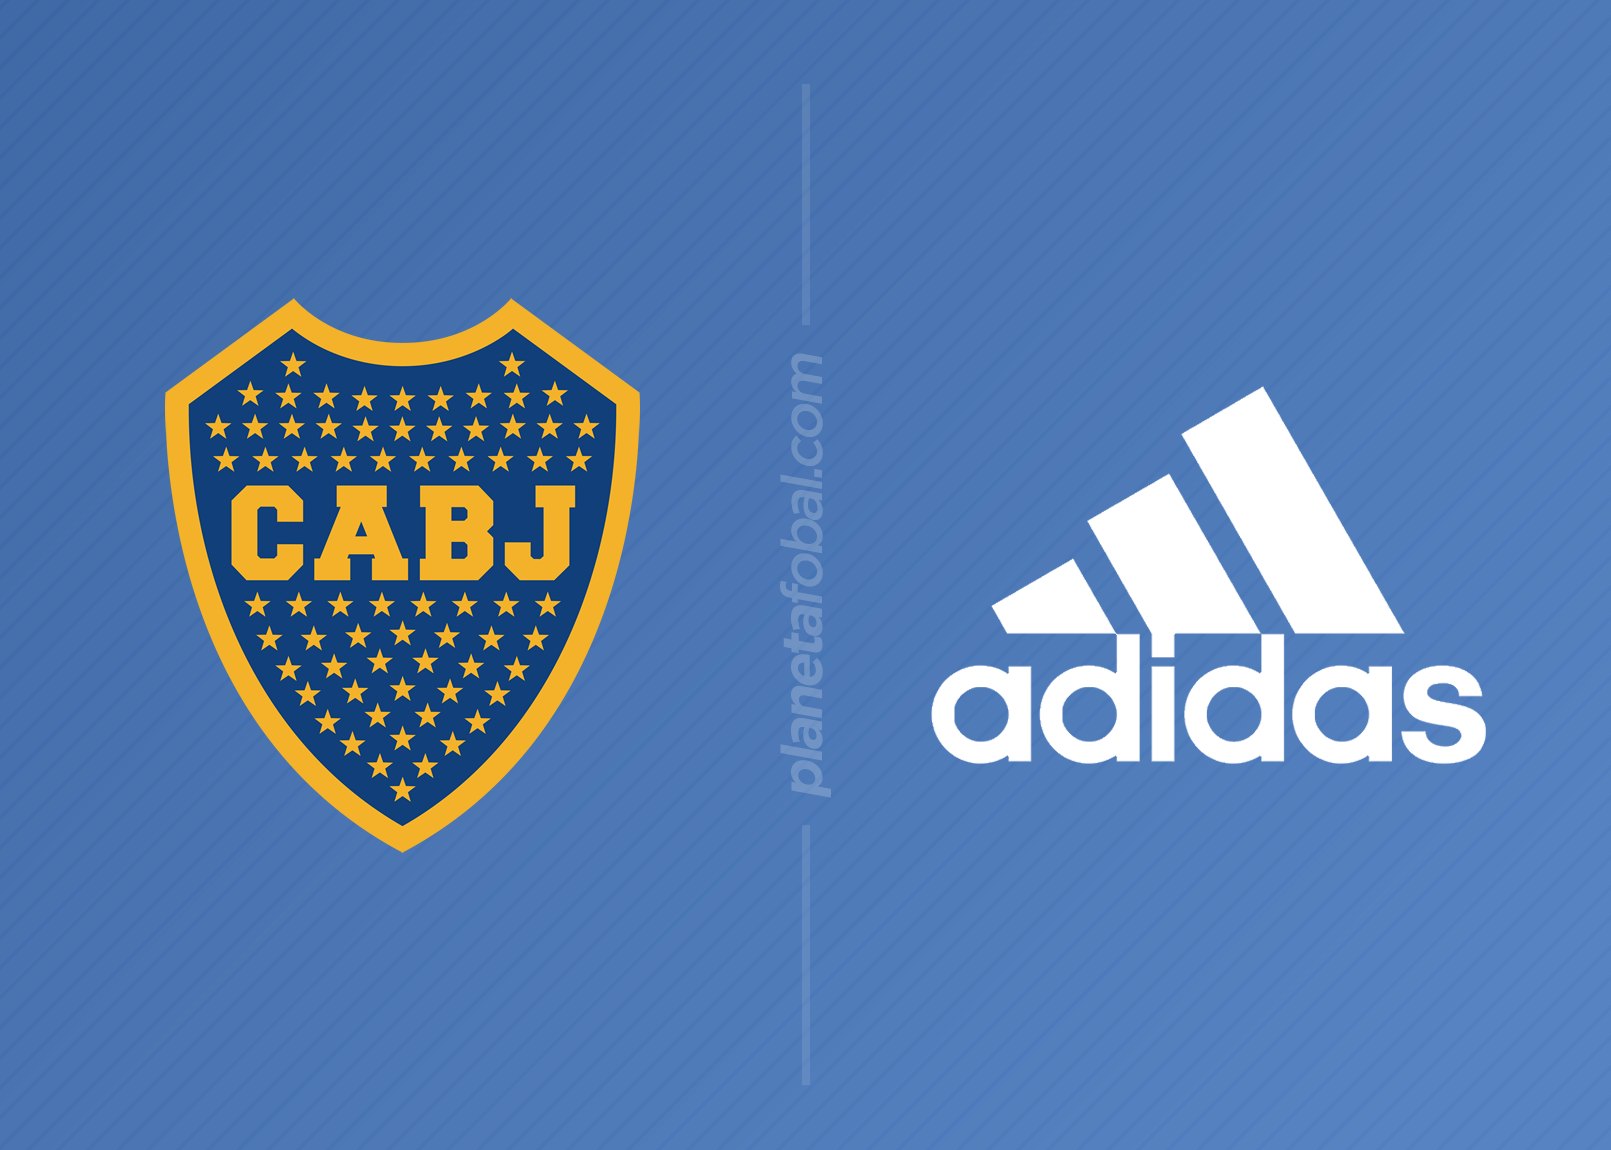 Boca oficializa su contrato con Adidas